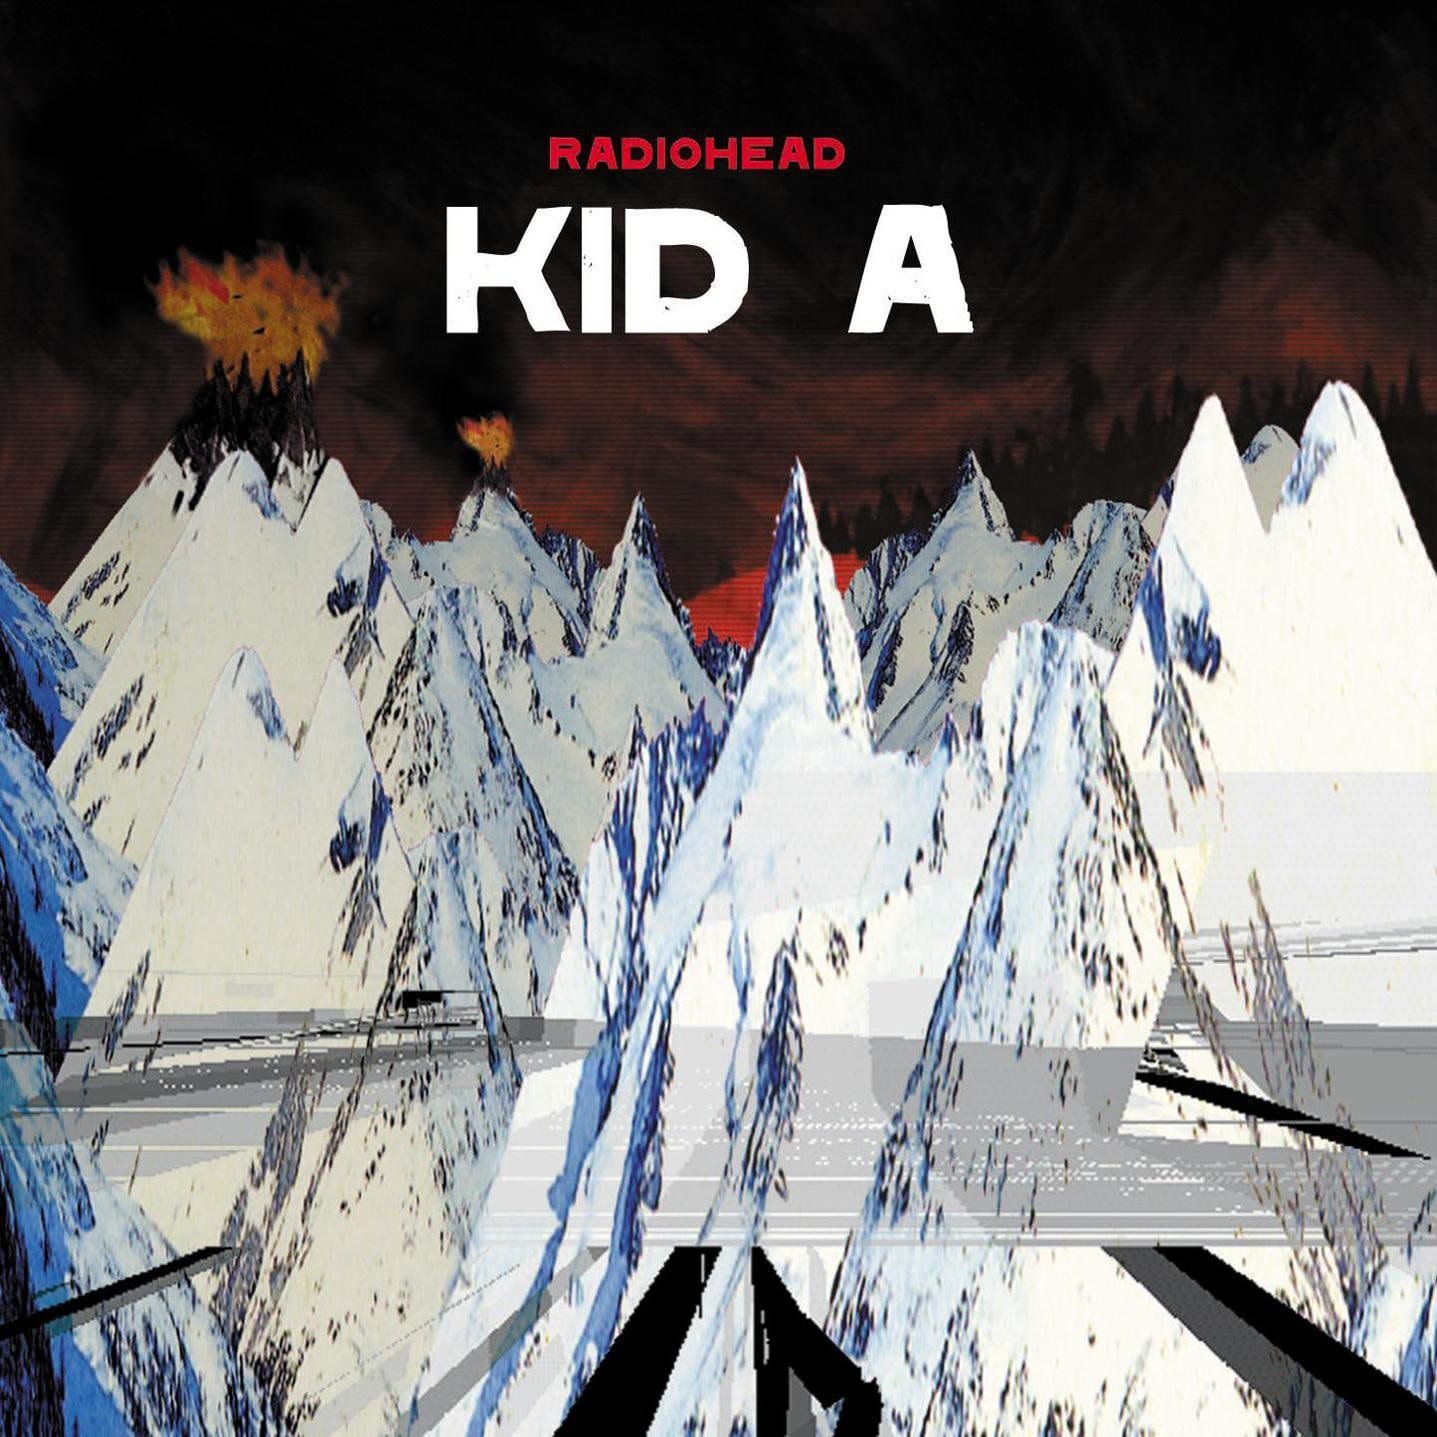 radiohead kid a mnesia exhibition map